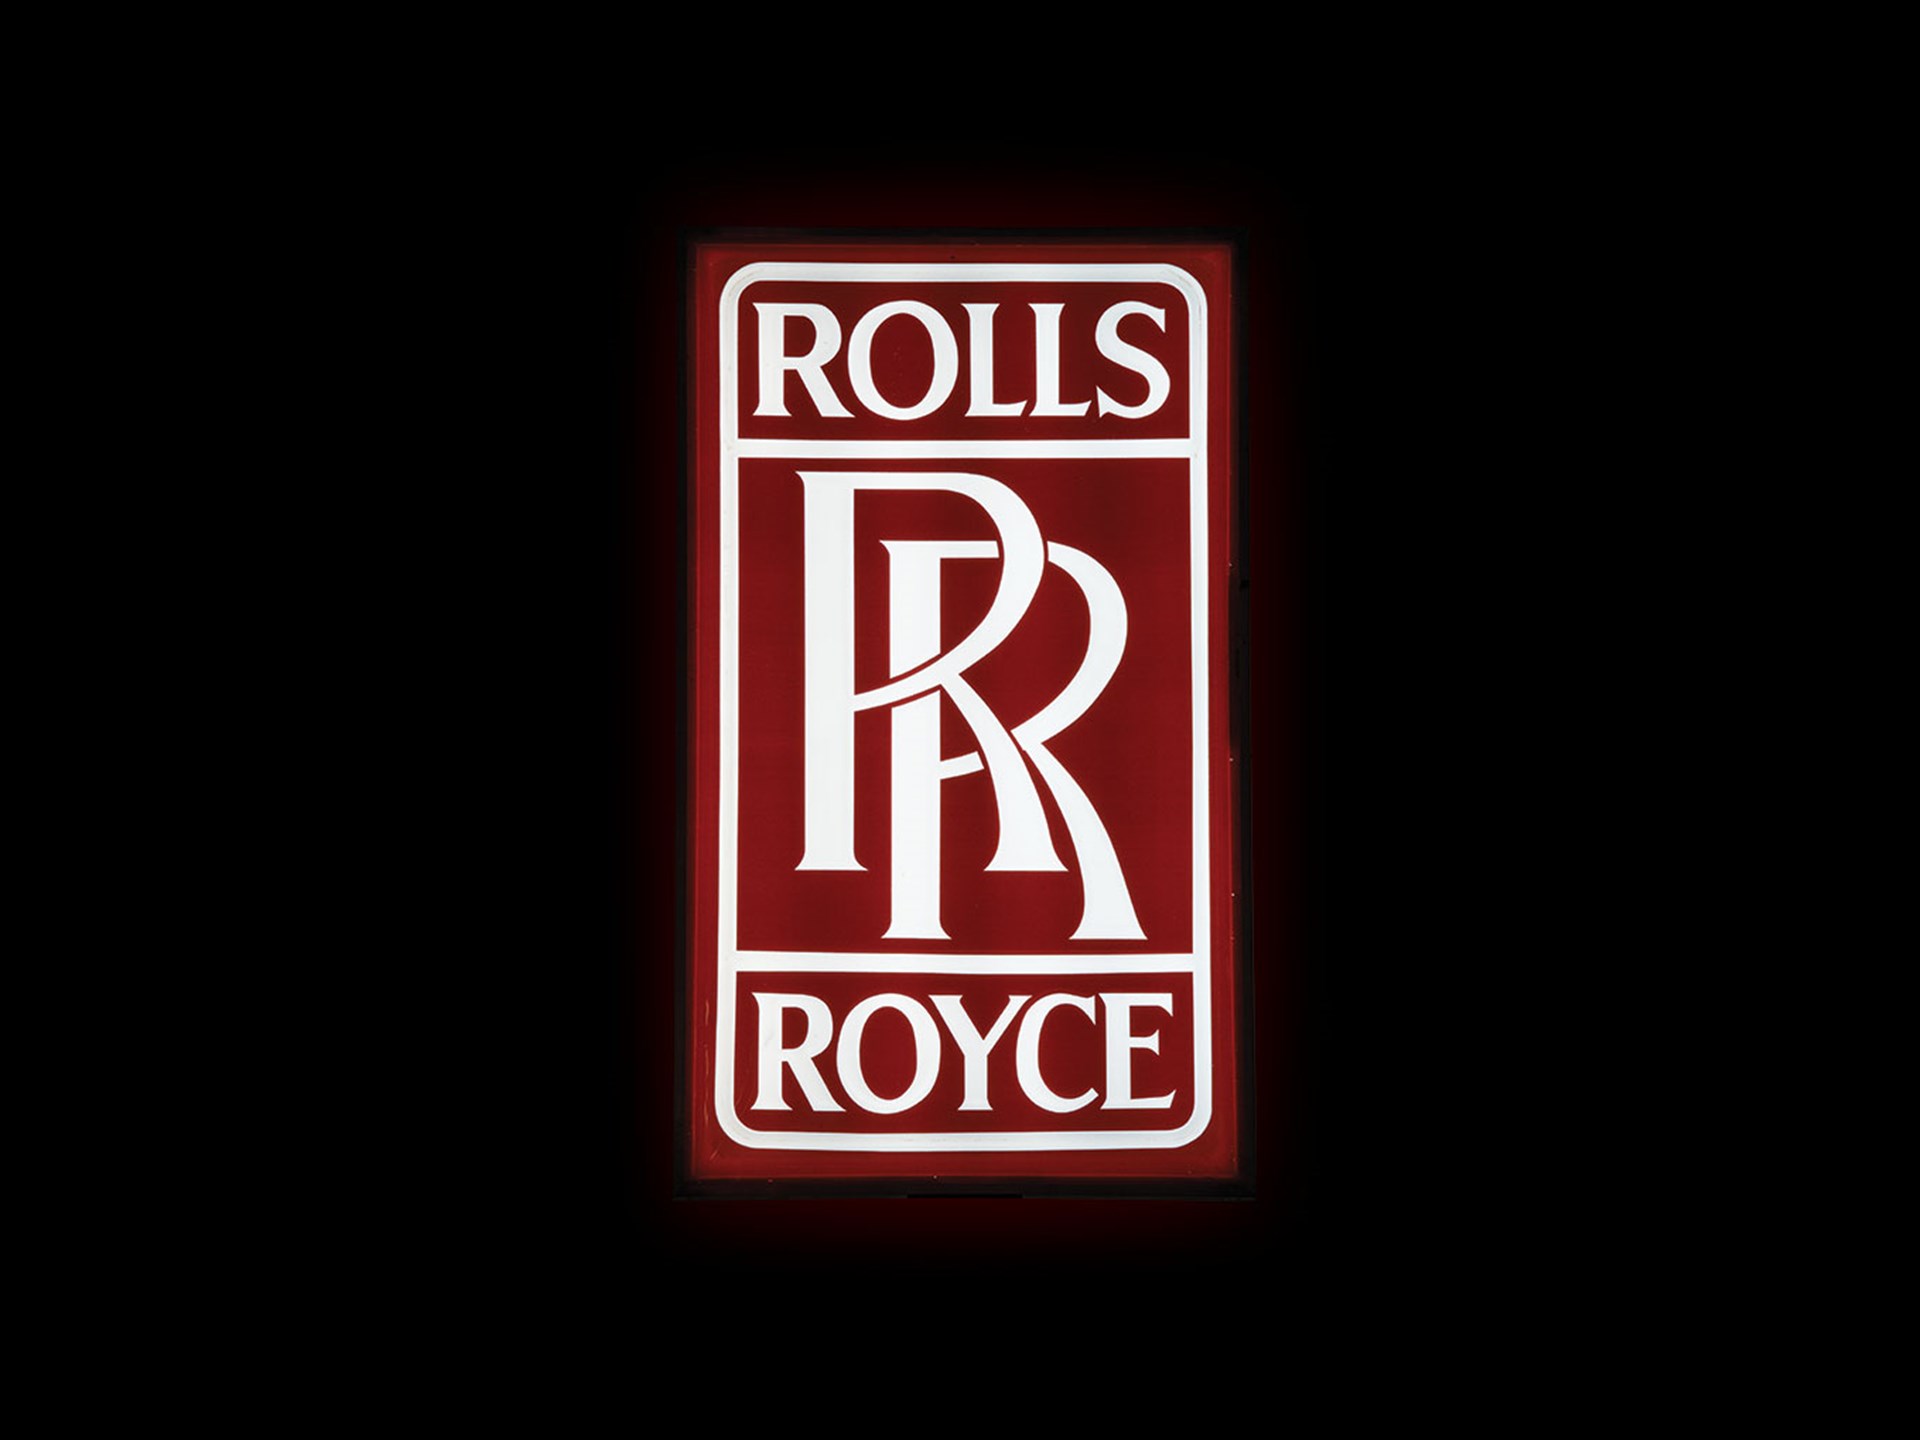 Rolls royce sign